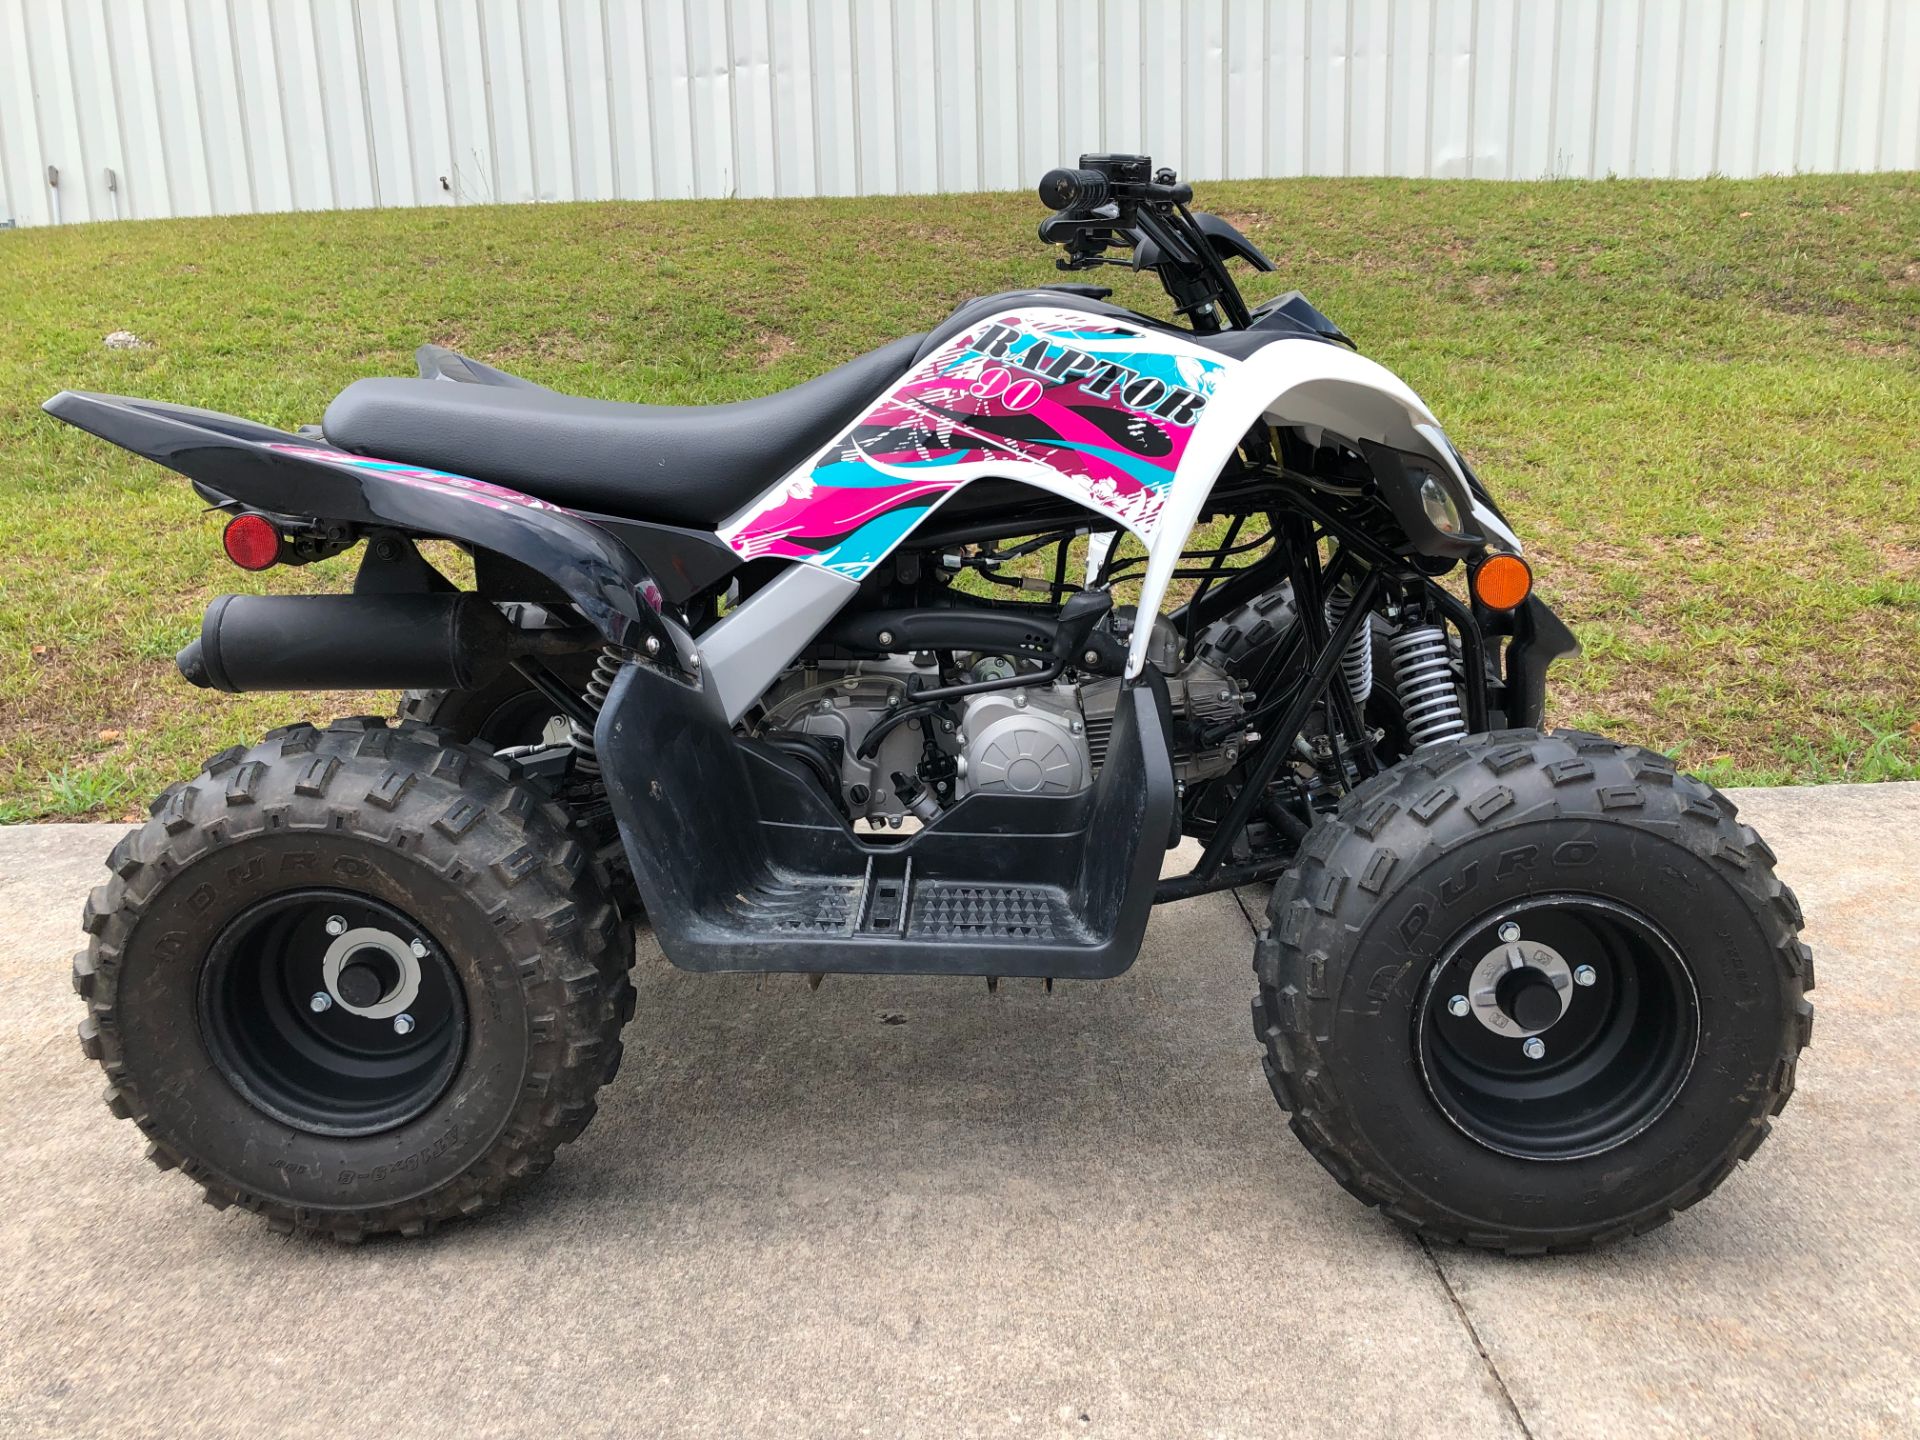 2019 Yamaha Raptor 90 in Fayetteville, Georgia - Photo 1